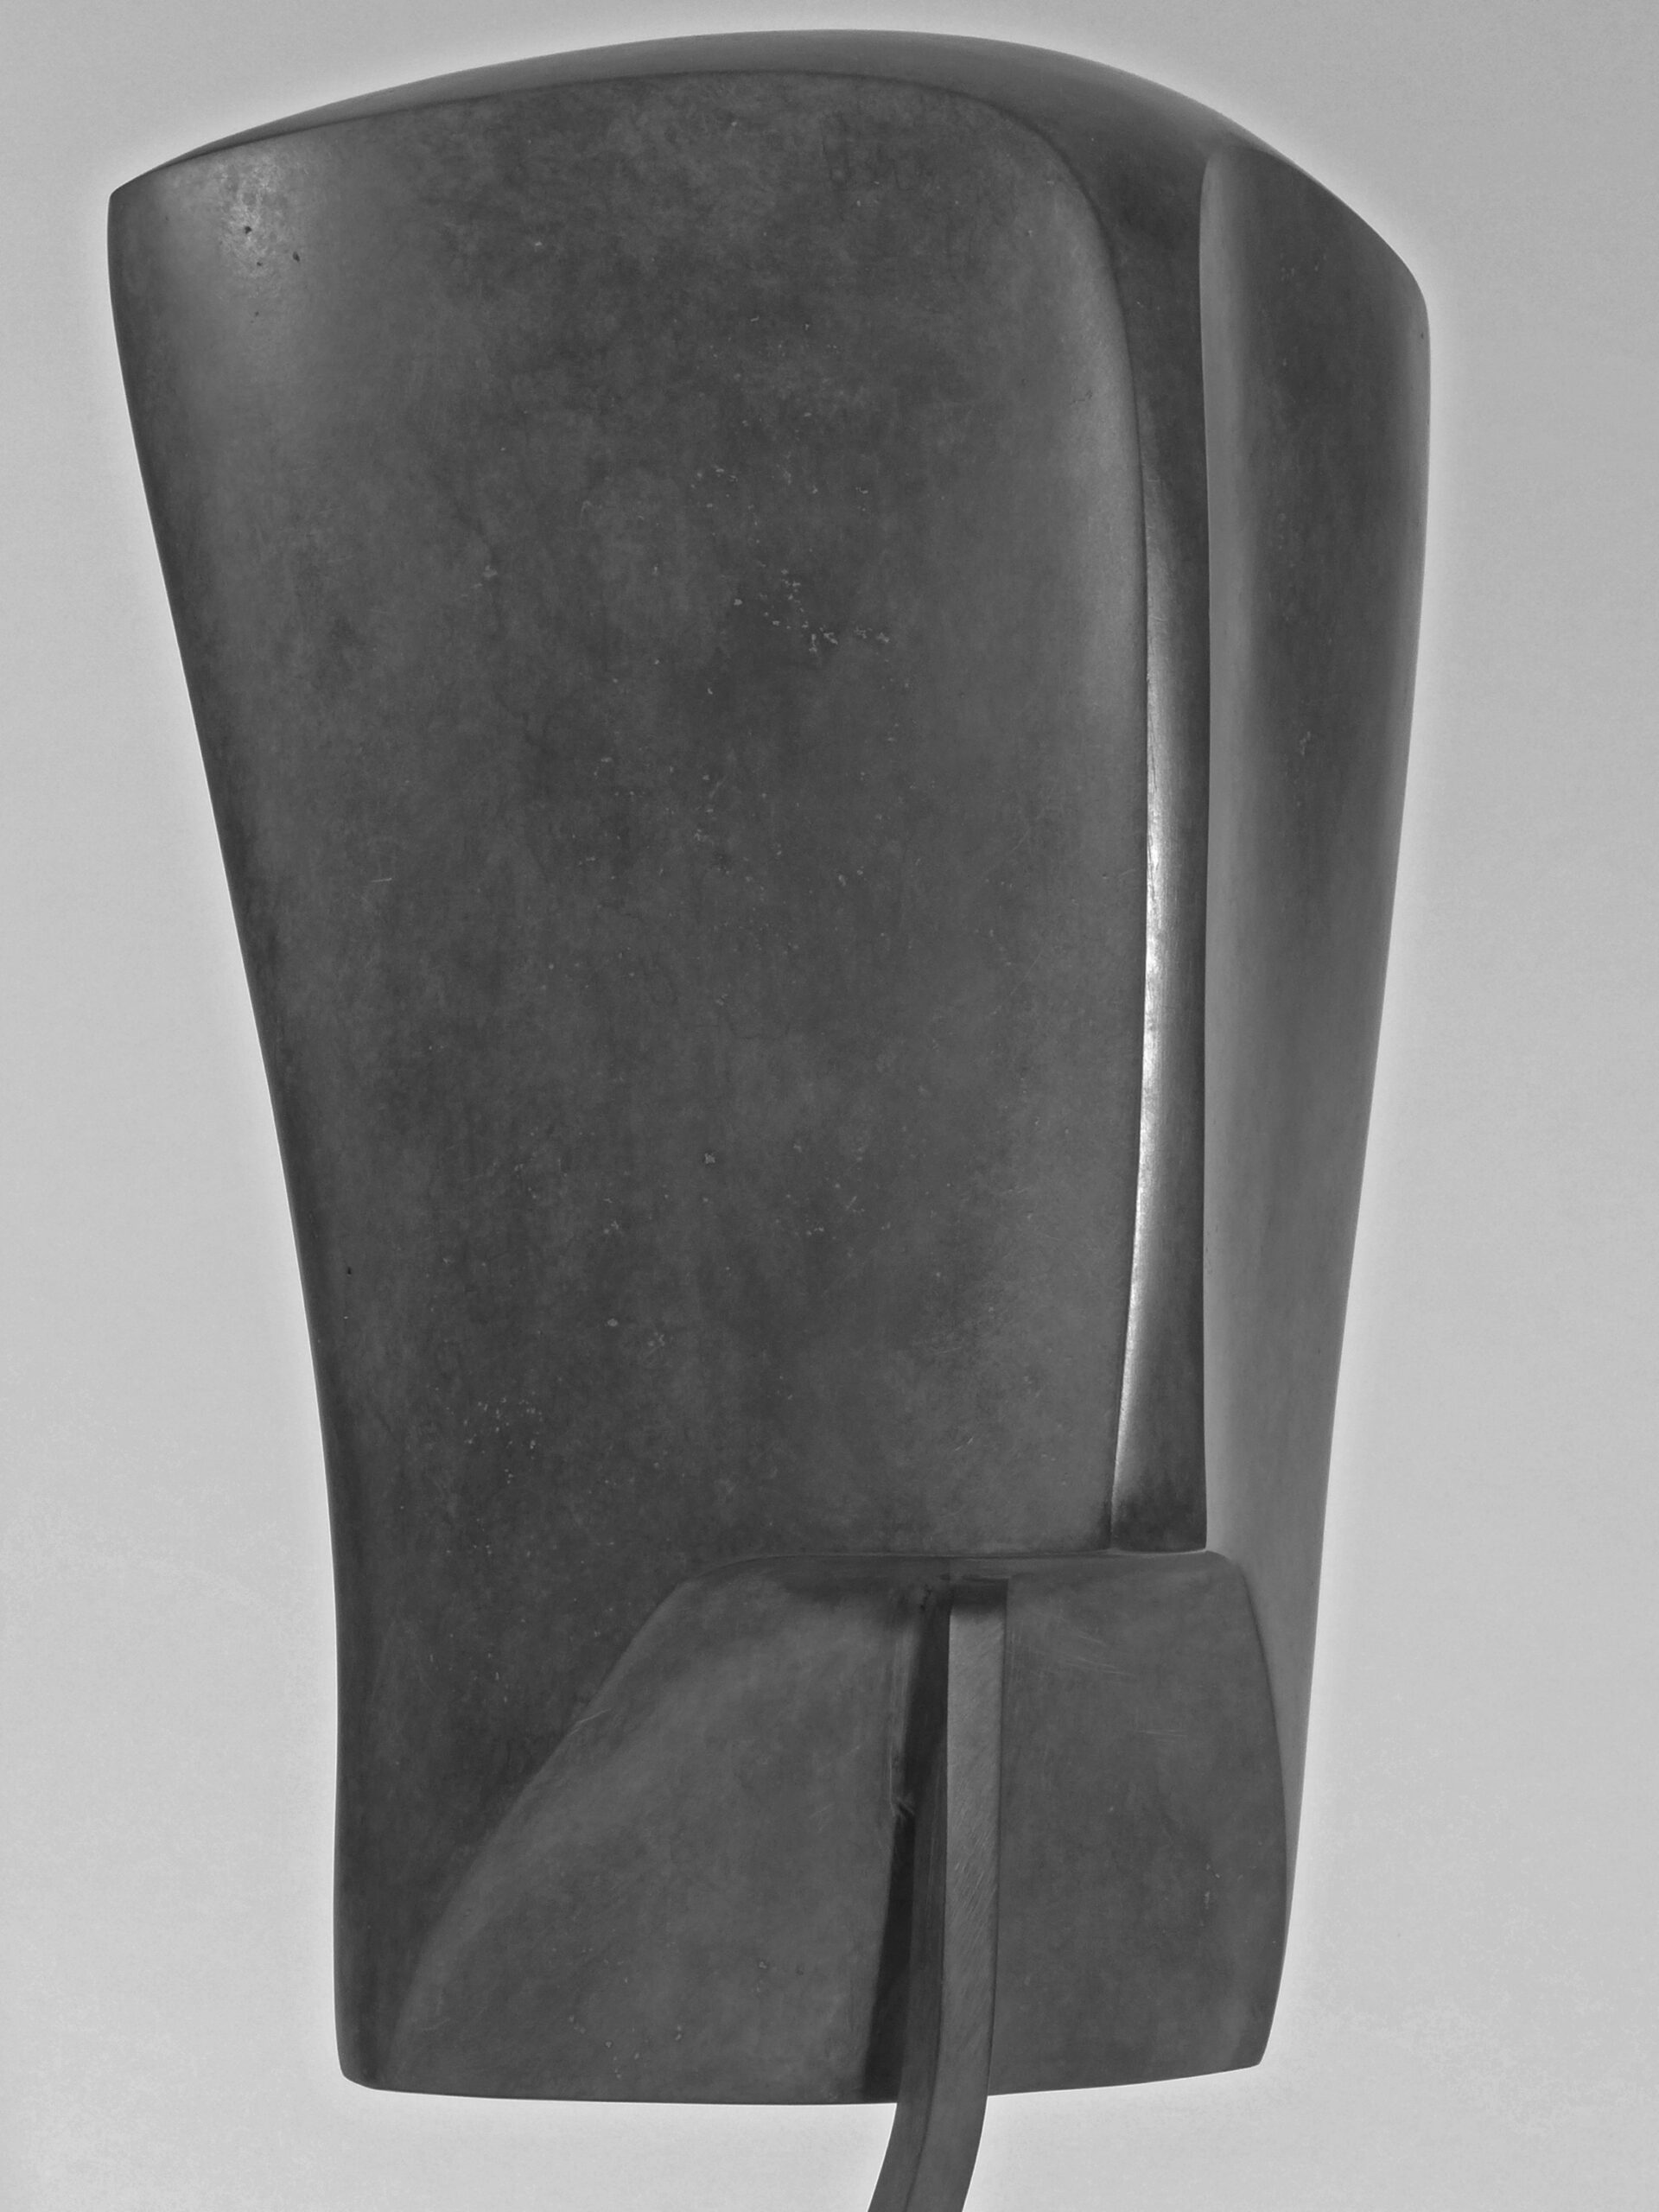 10 La Gourmandise, 1986, bronze, h 64 cm